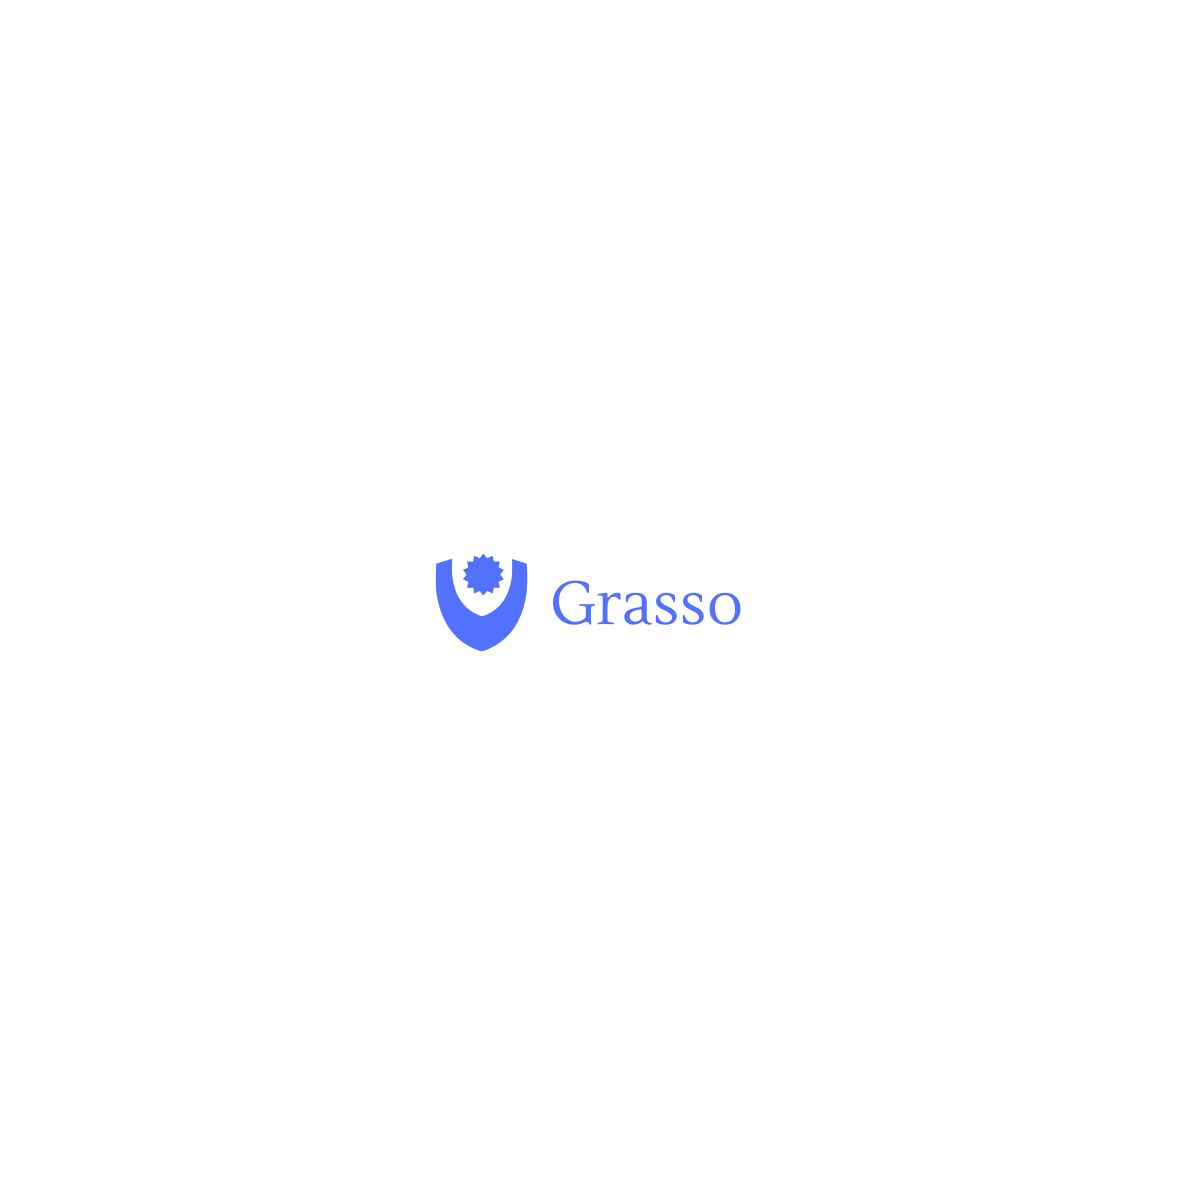 Grasso